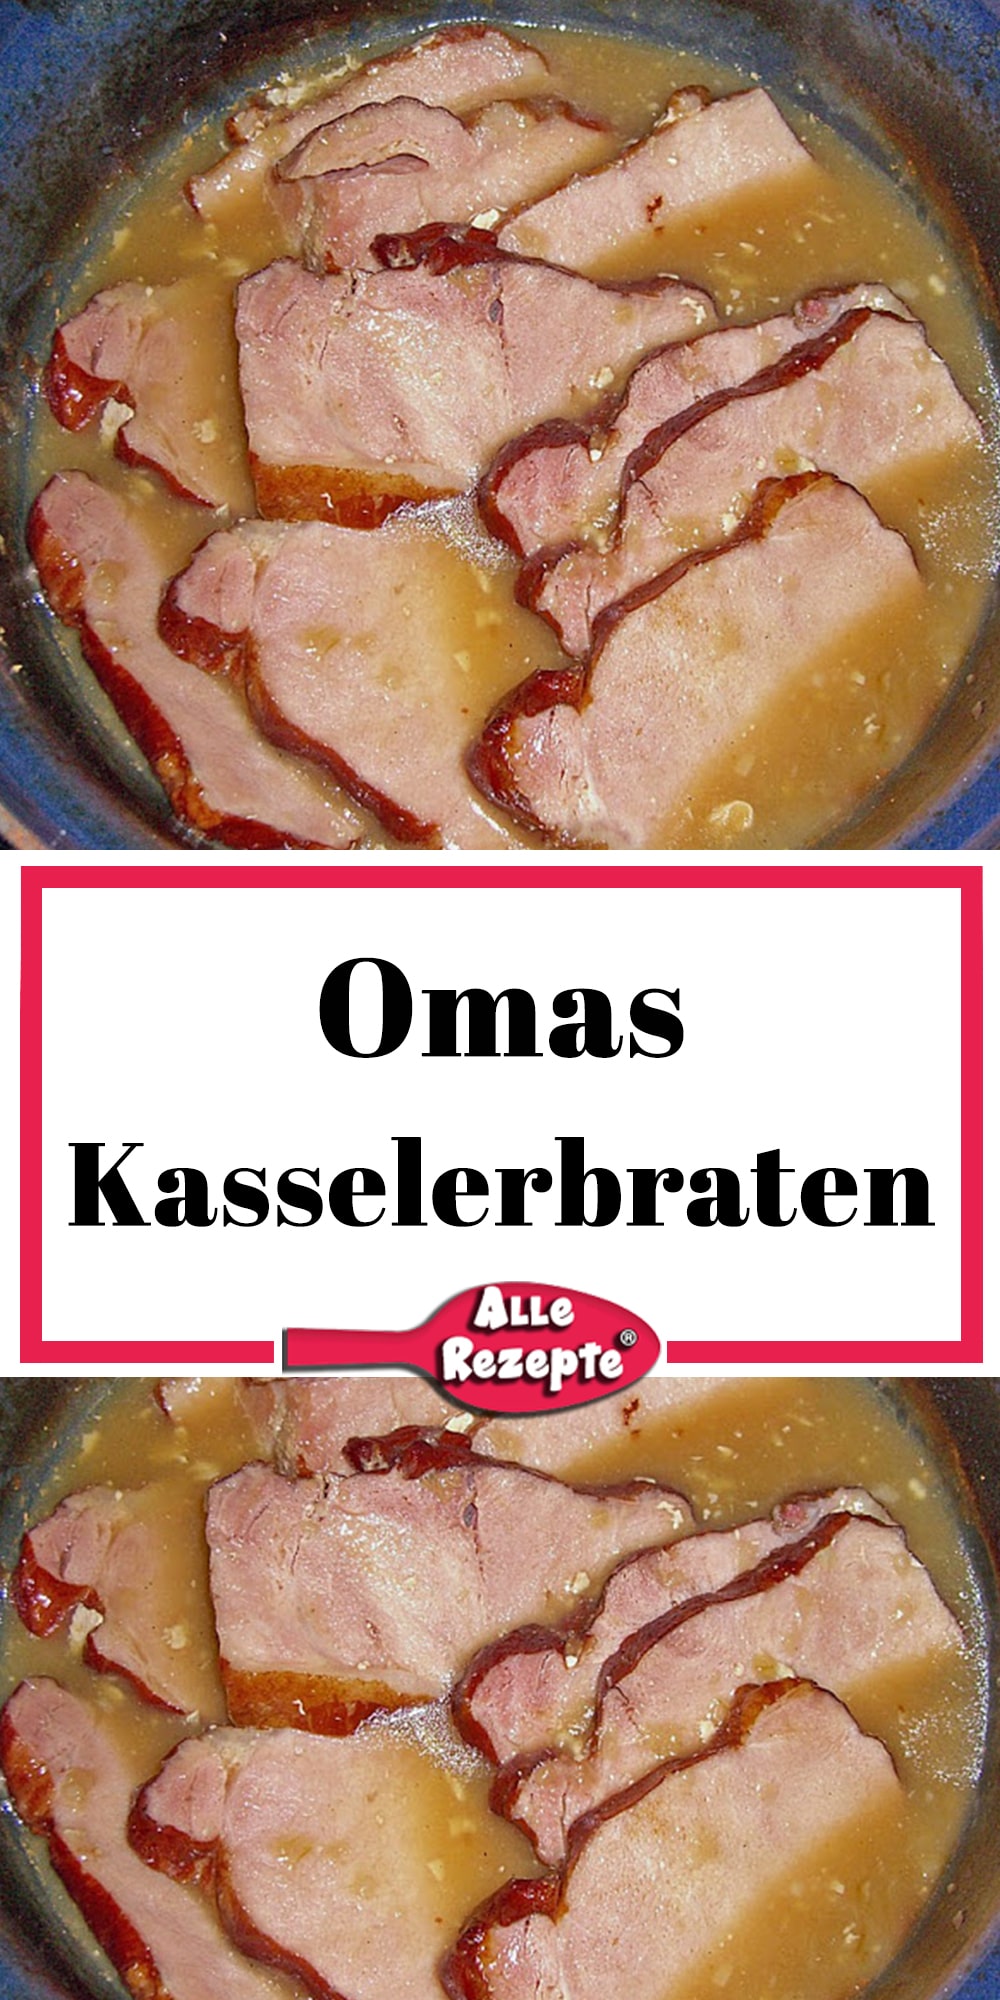 Omas Kasselerbraten Alle Rezepte